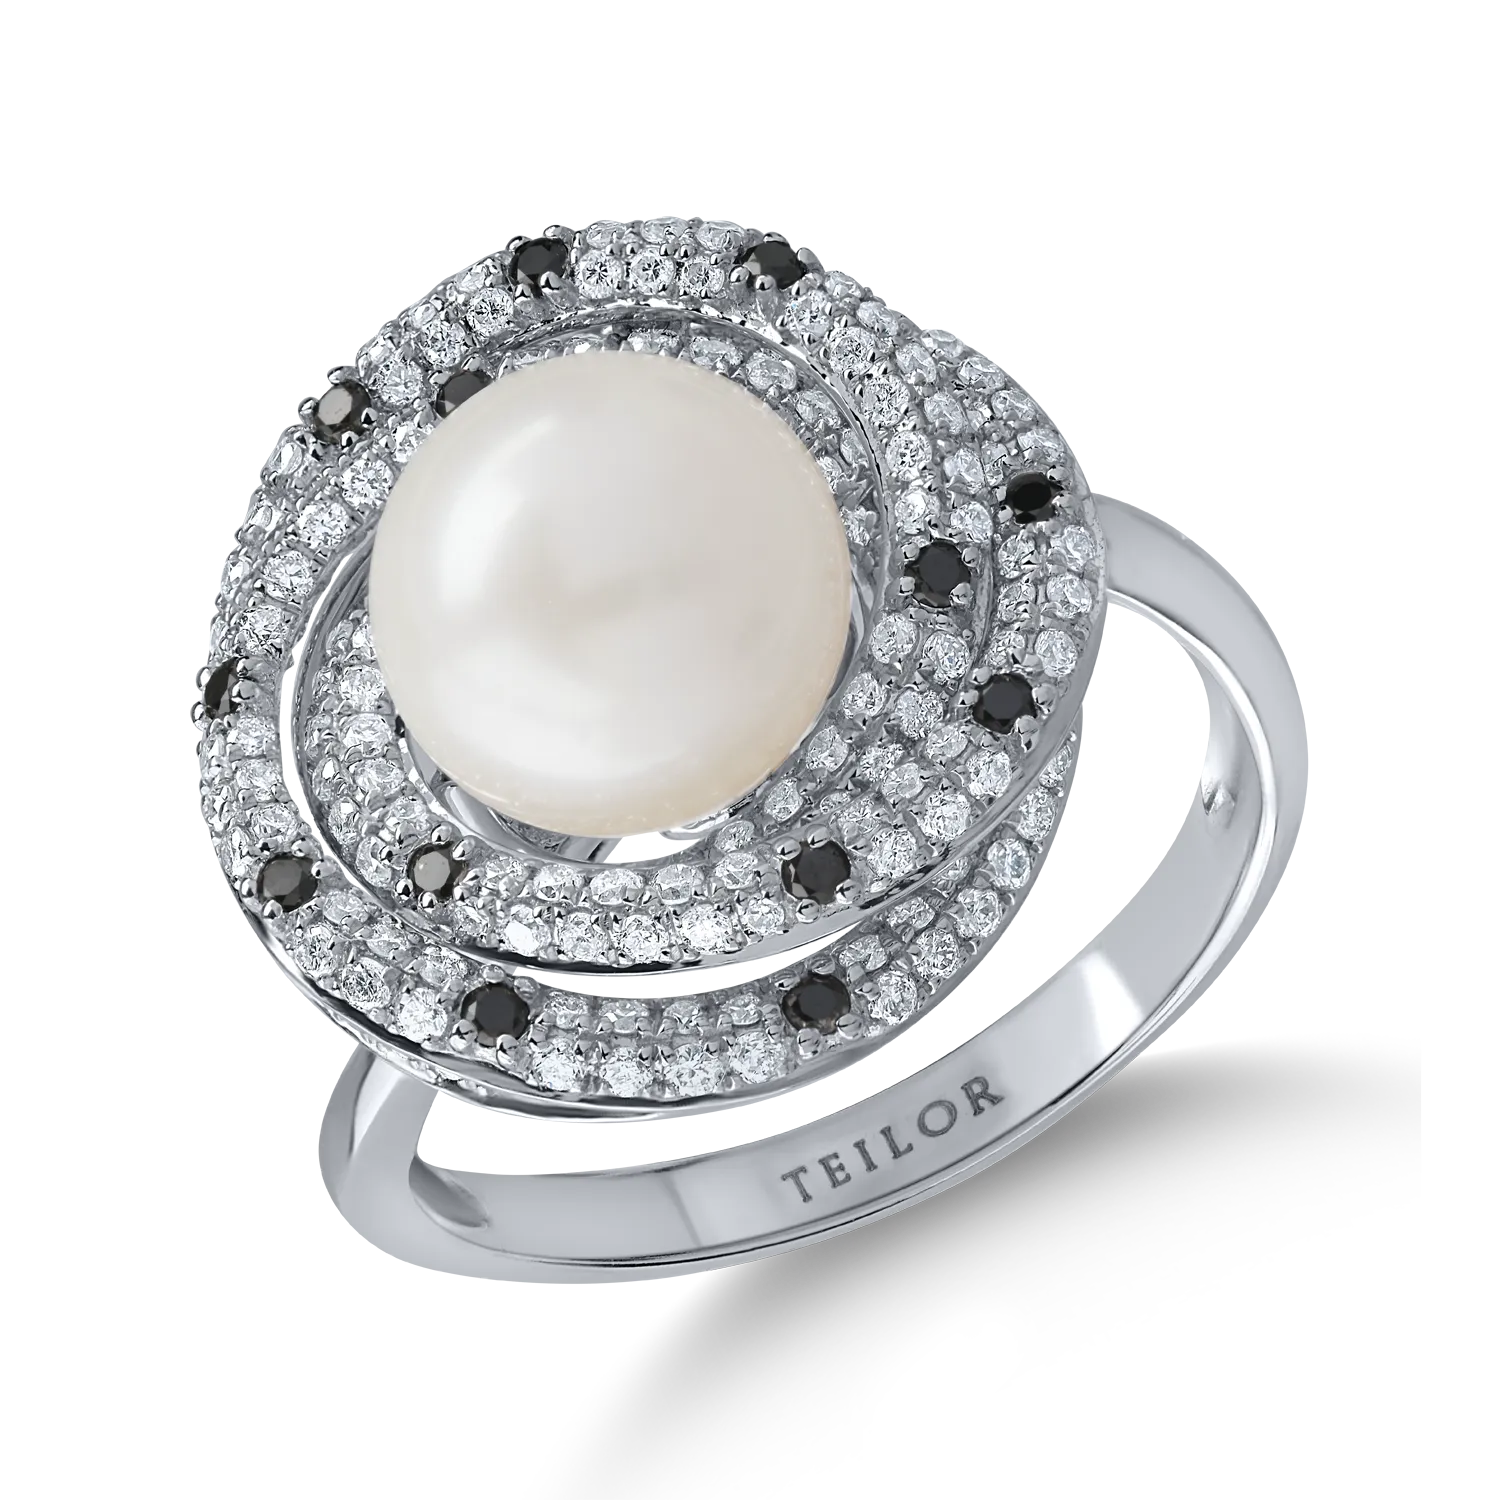 Inel din aur alb cu perla de cultura de 4.7ct si diamante de 0.7ct